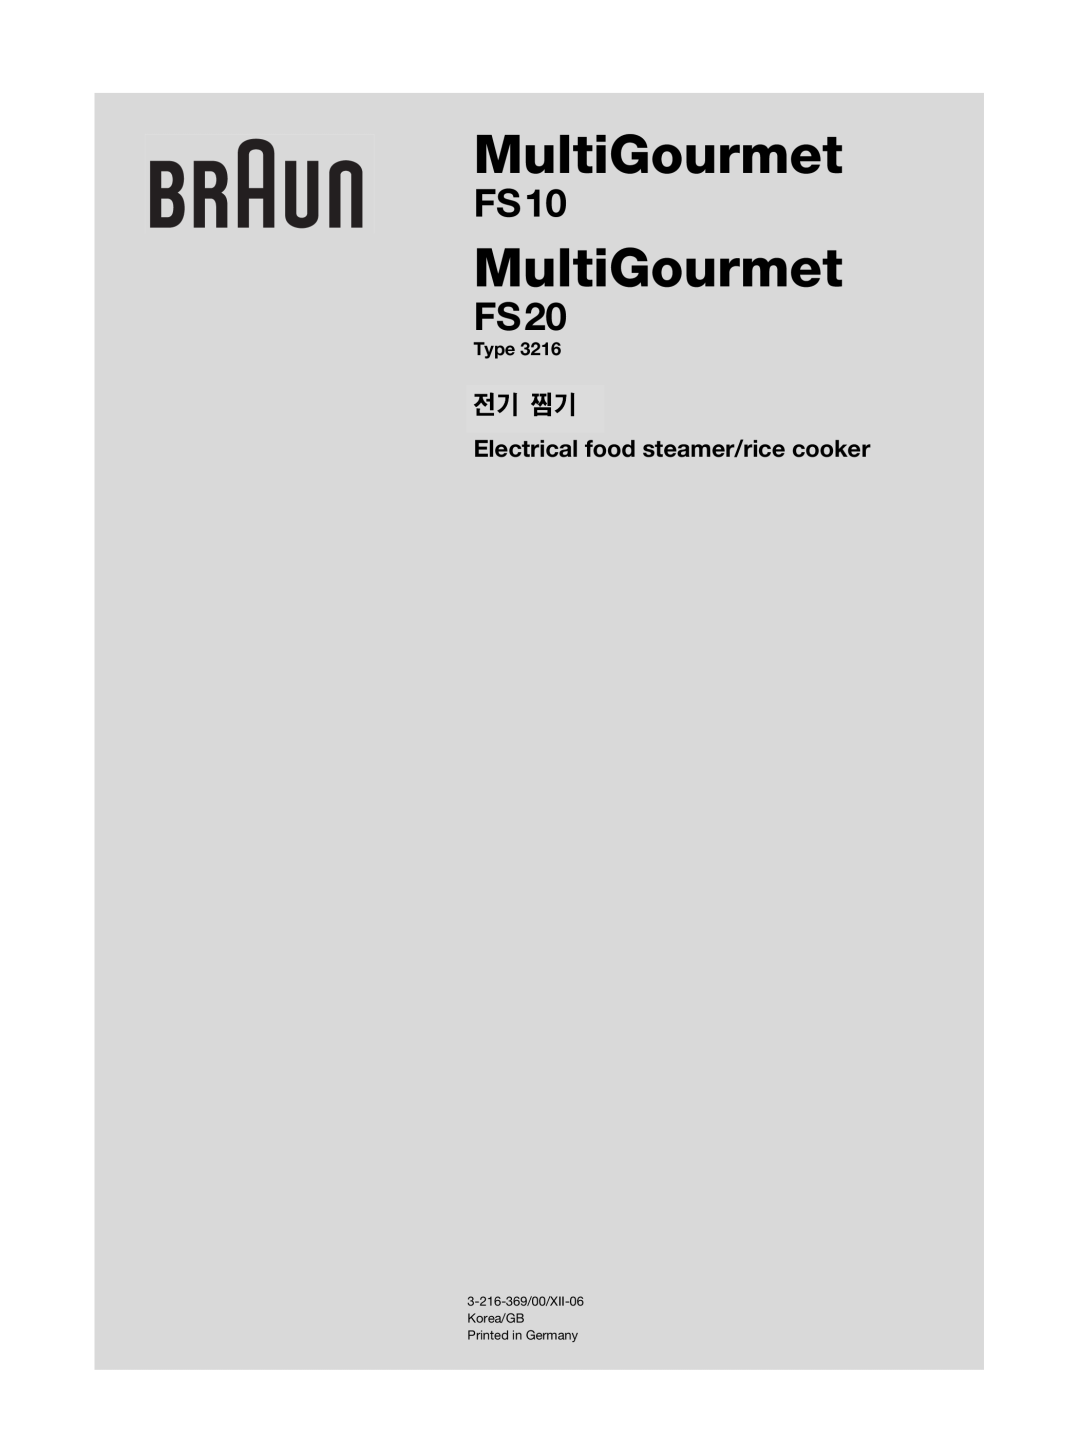 Braun FS10 manual MultiGourmet, FS20, Electrical food steamer/rice cooker 